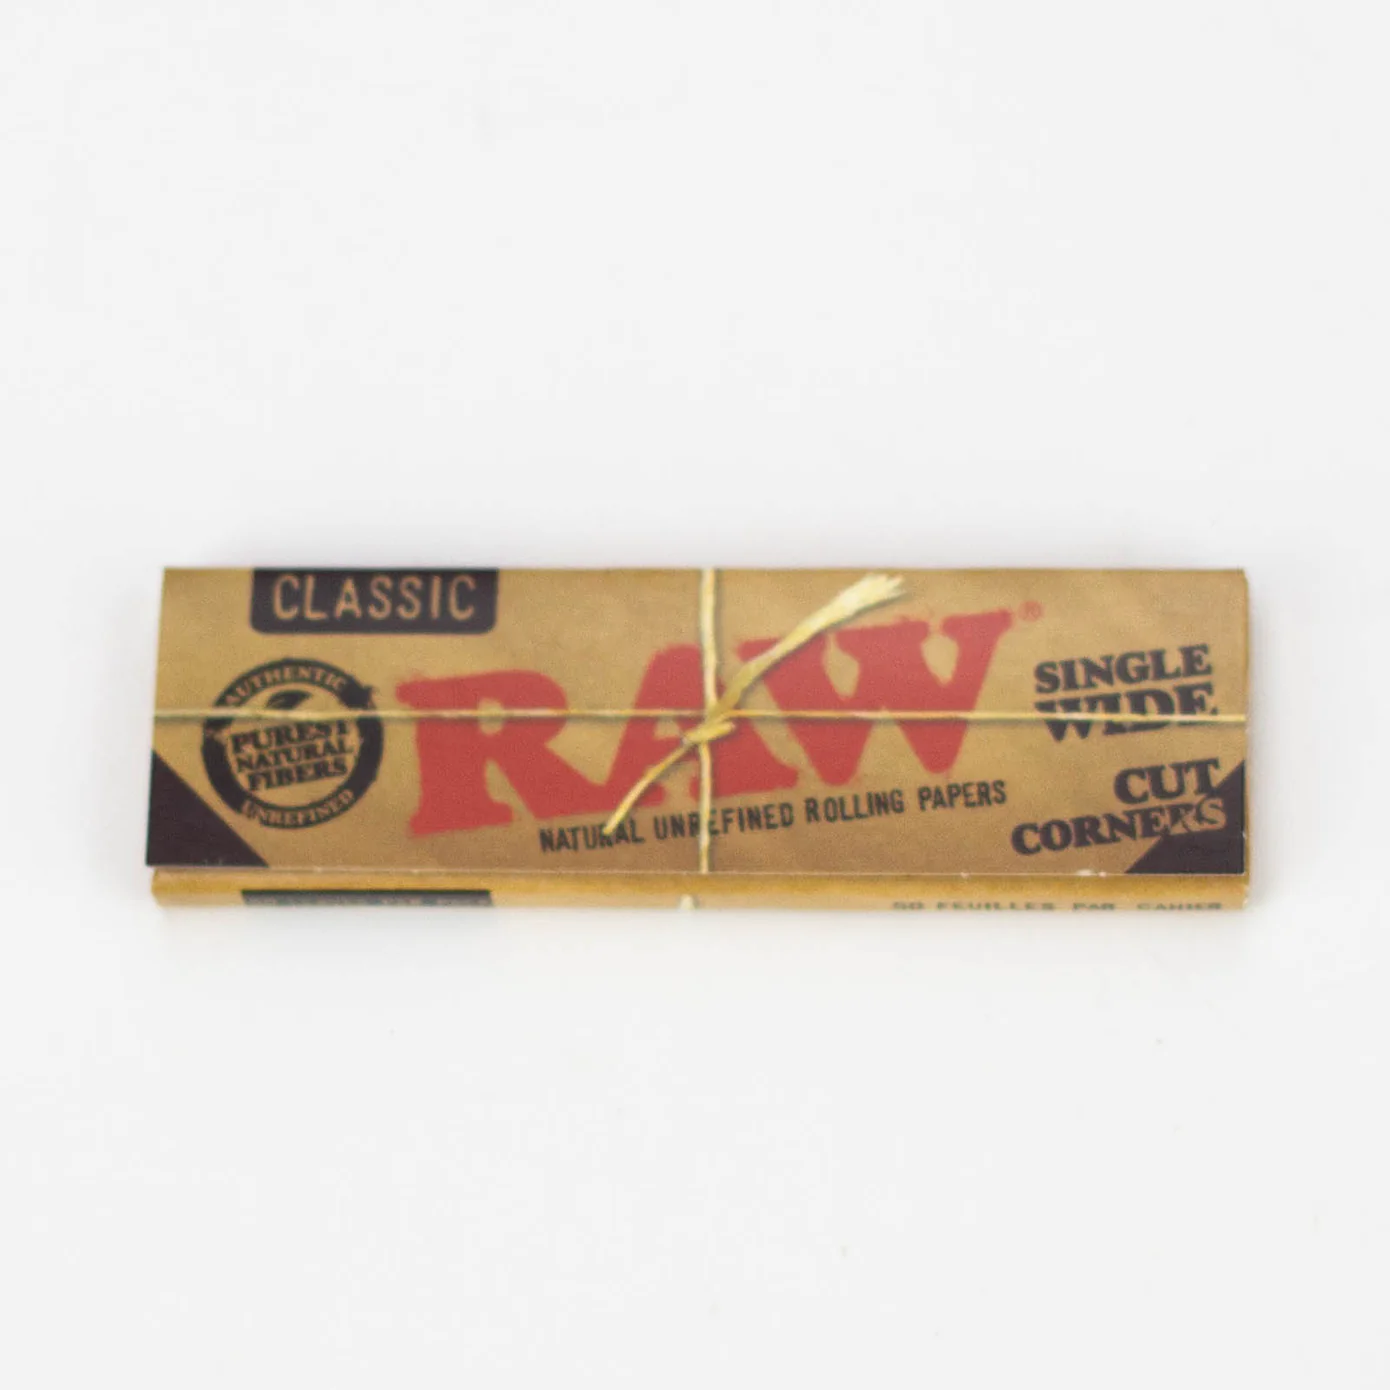 Raw classic single wide cut corners